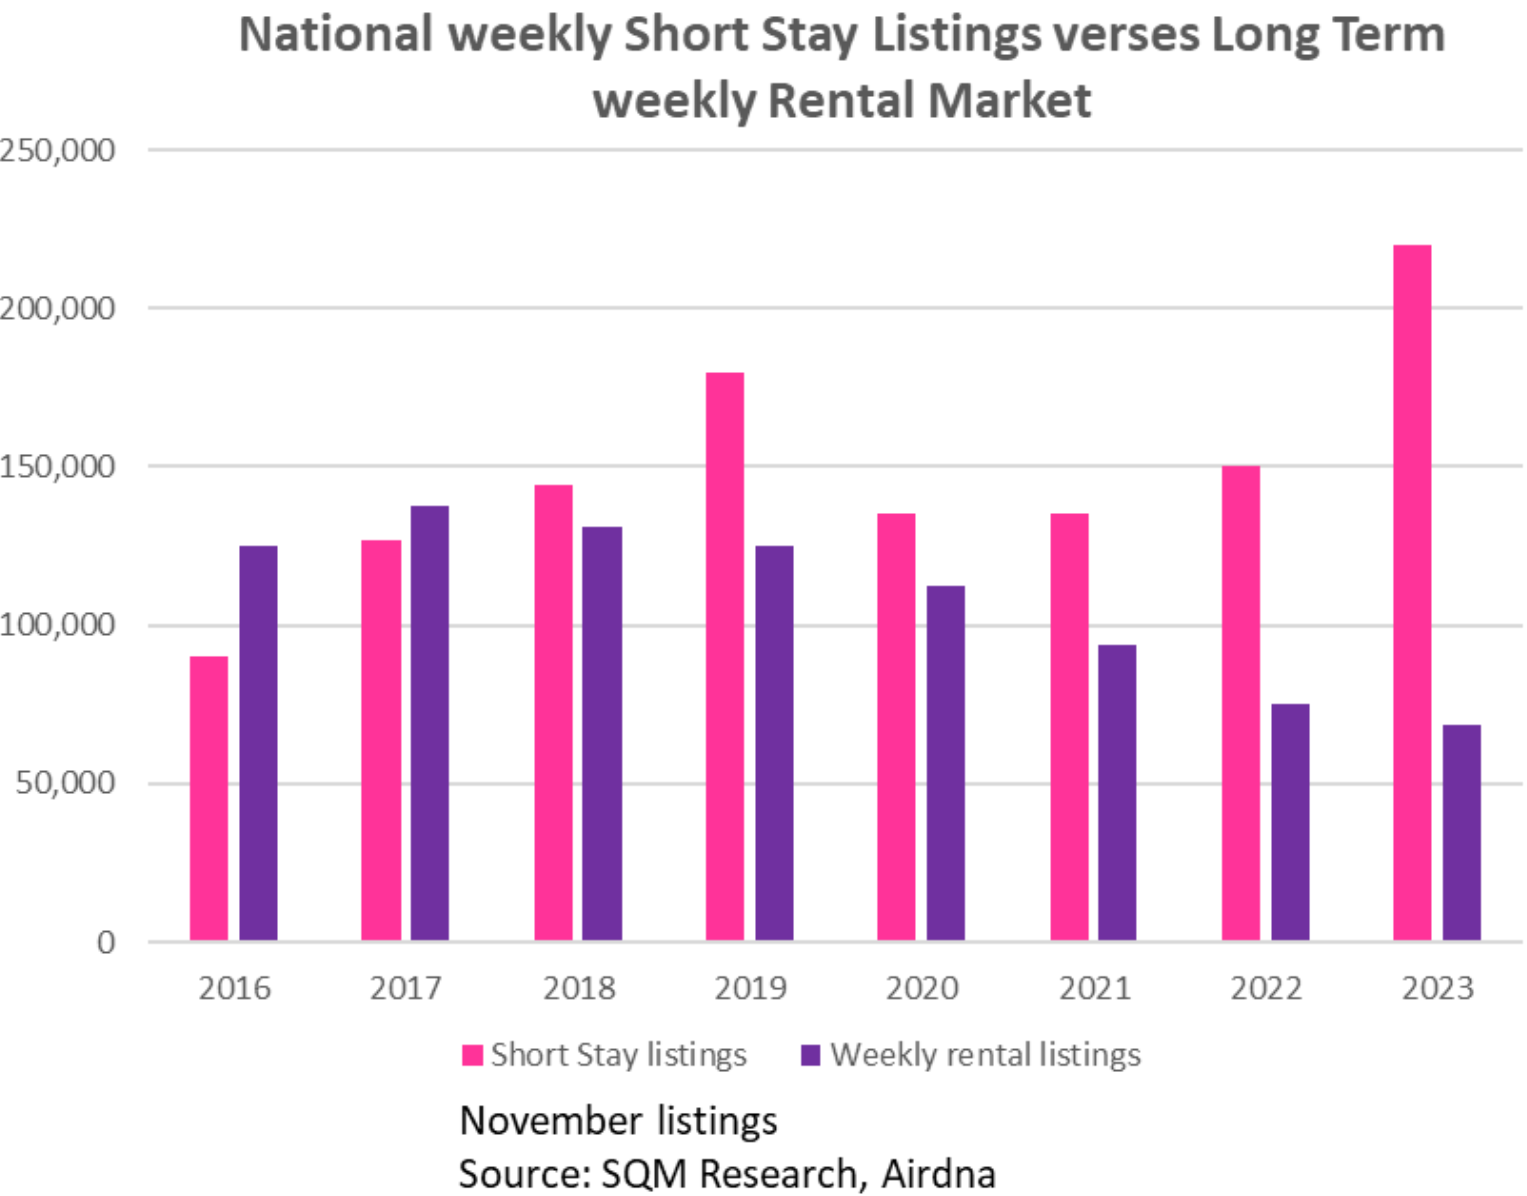 Long-stays vs short-stays